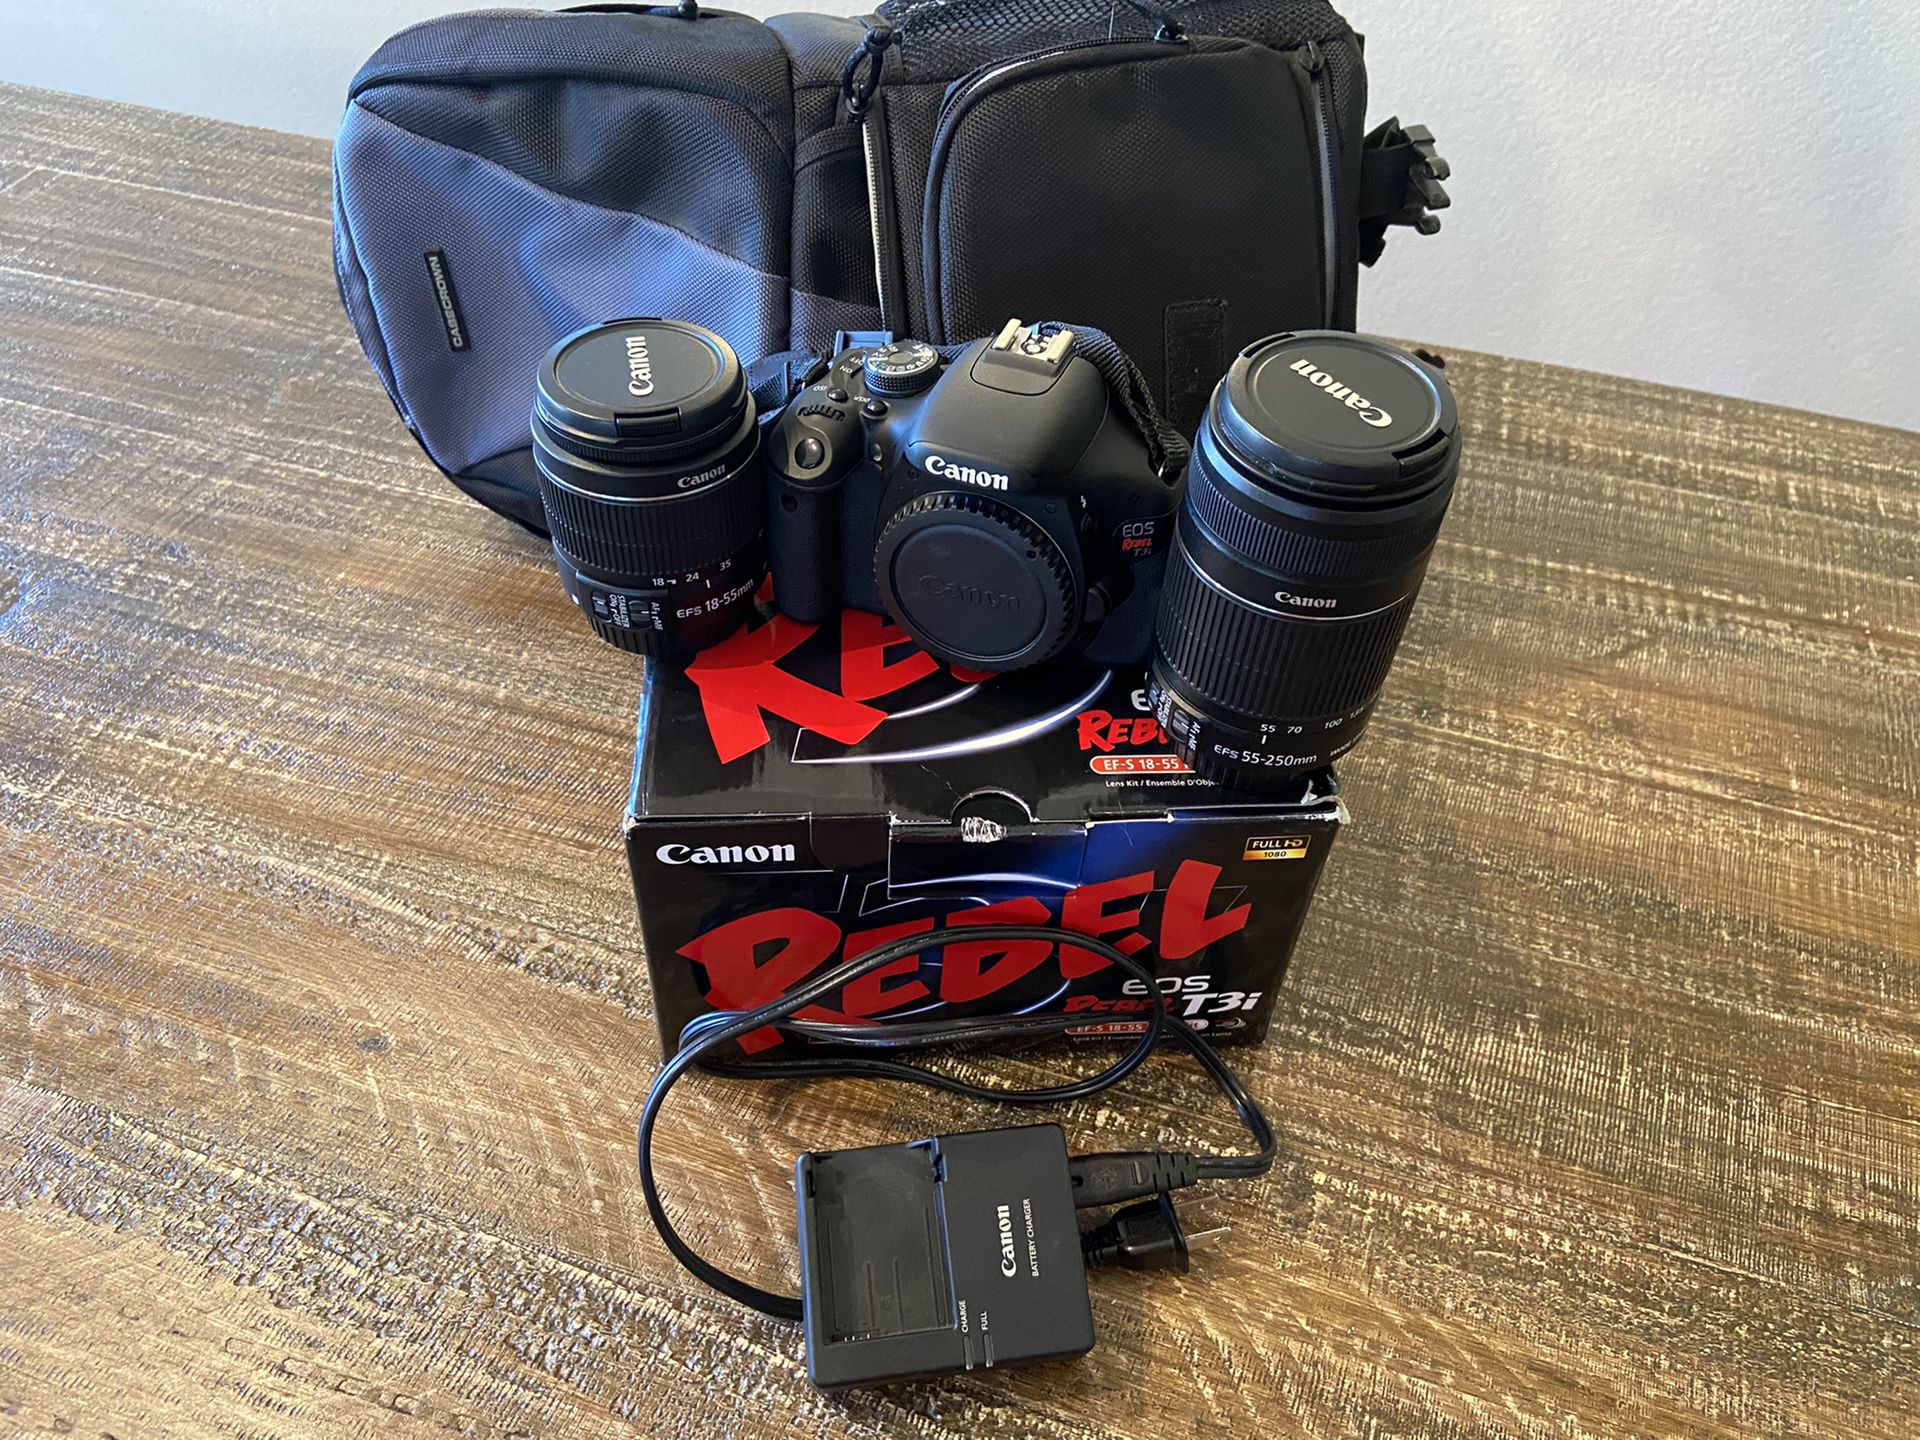 Canon Rebel T3i & Bag